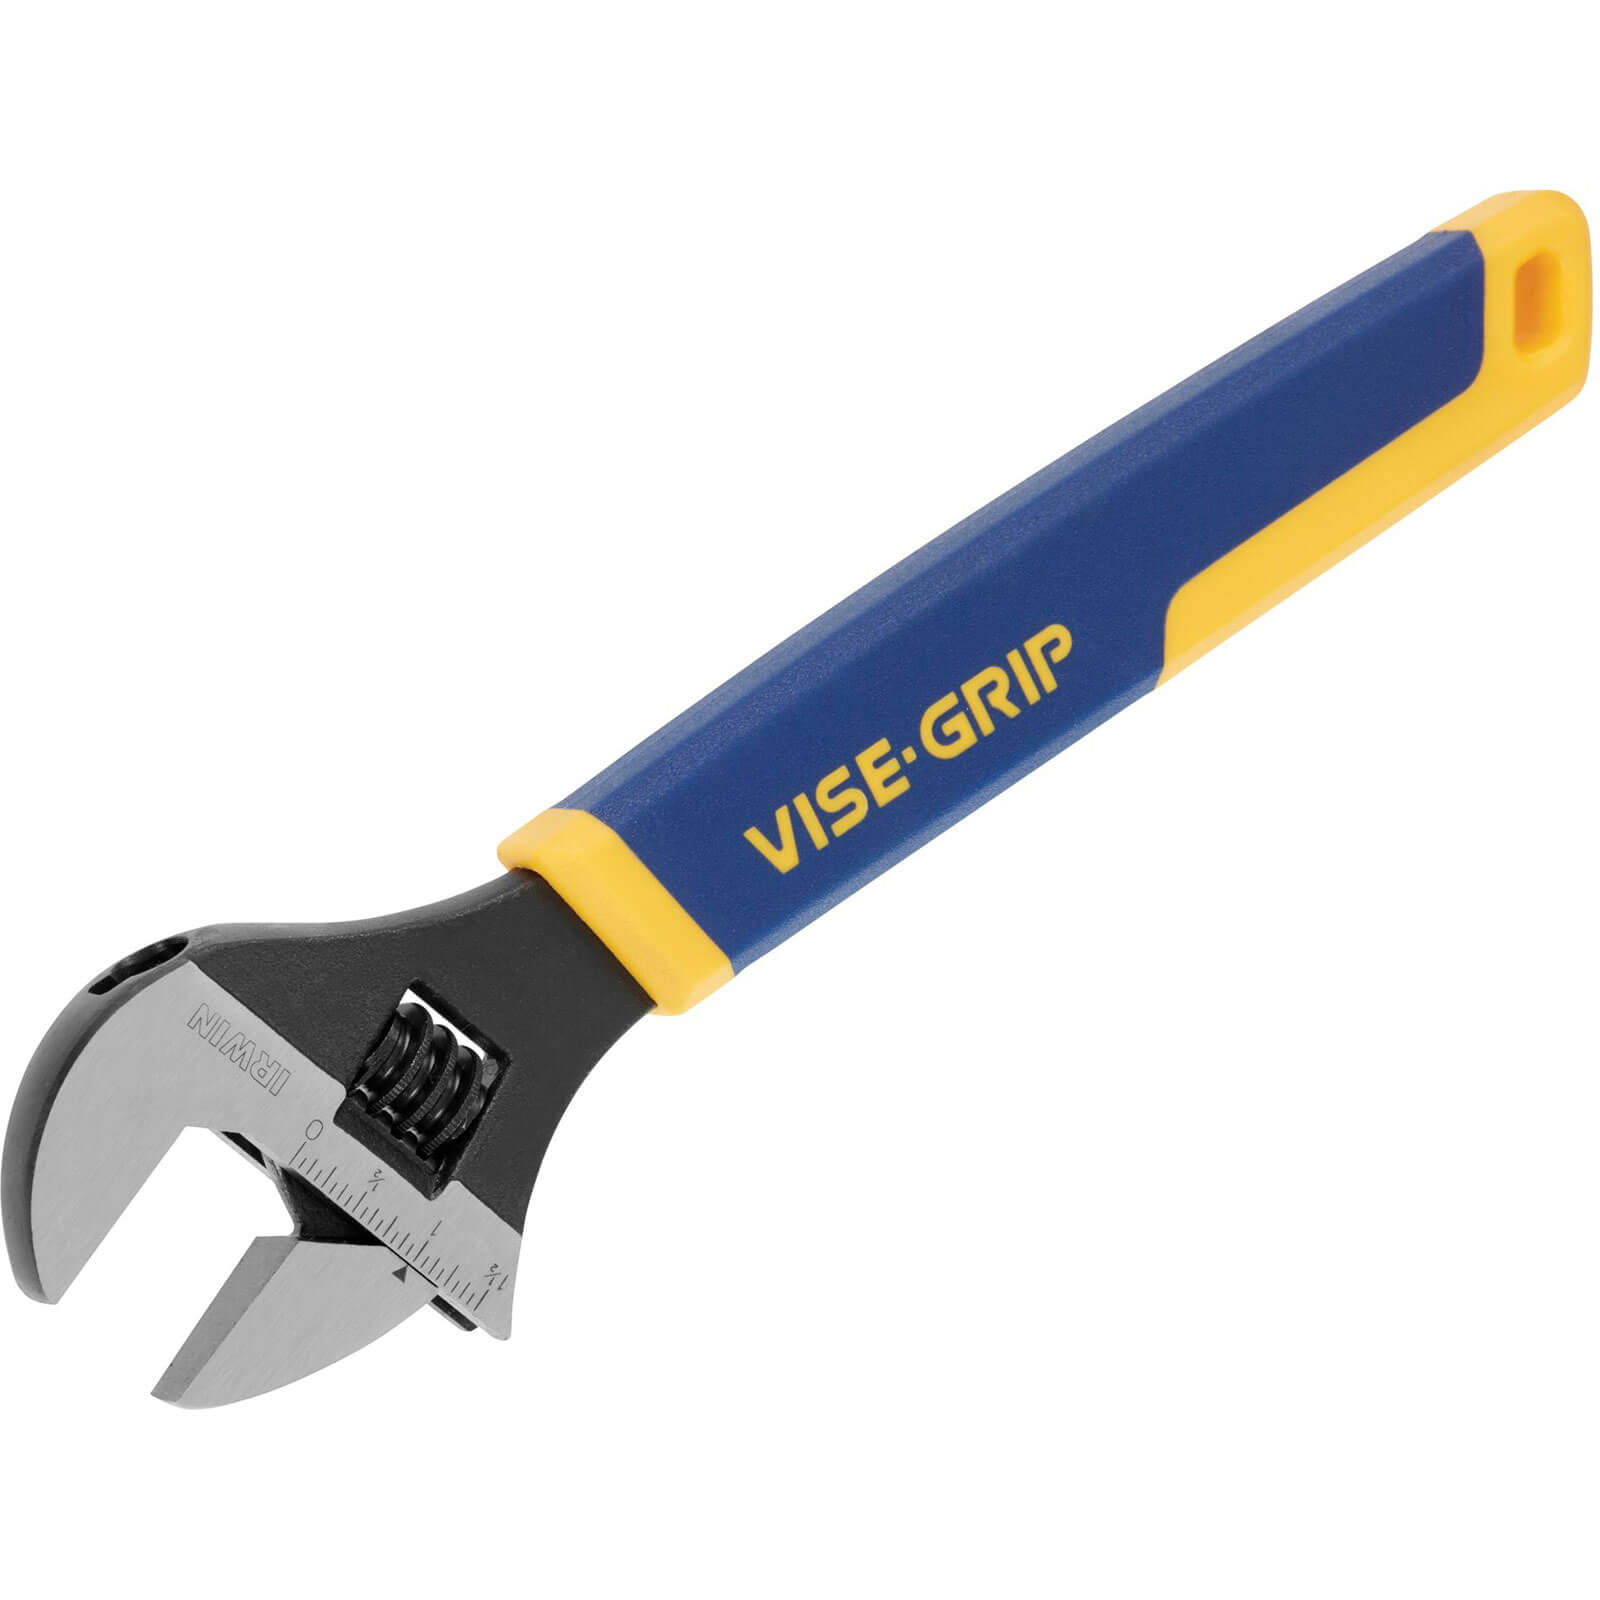 Image of Vise-Grip Adjustable Wrench 300mm